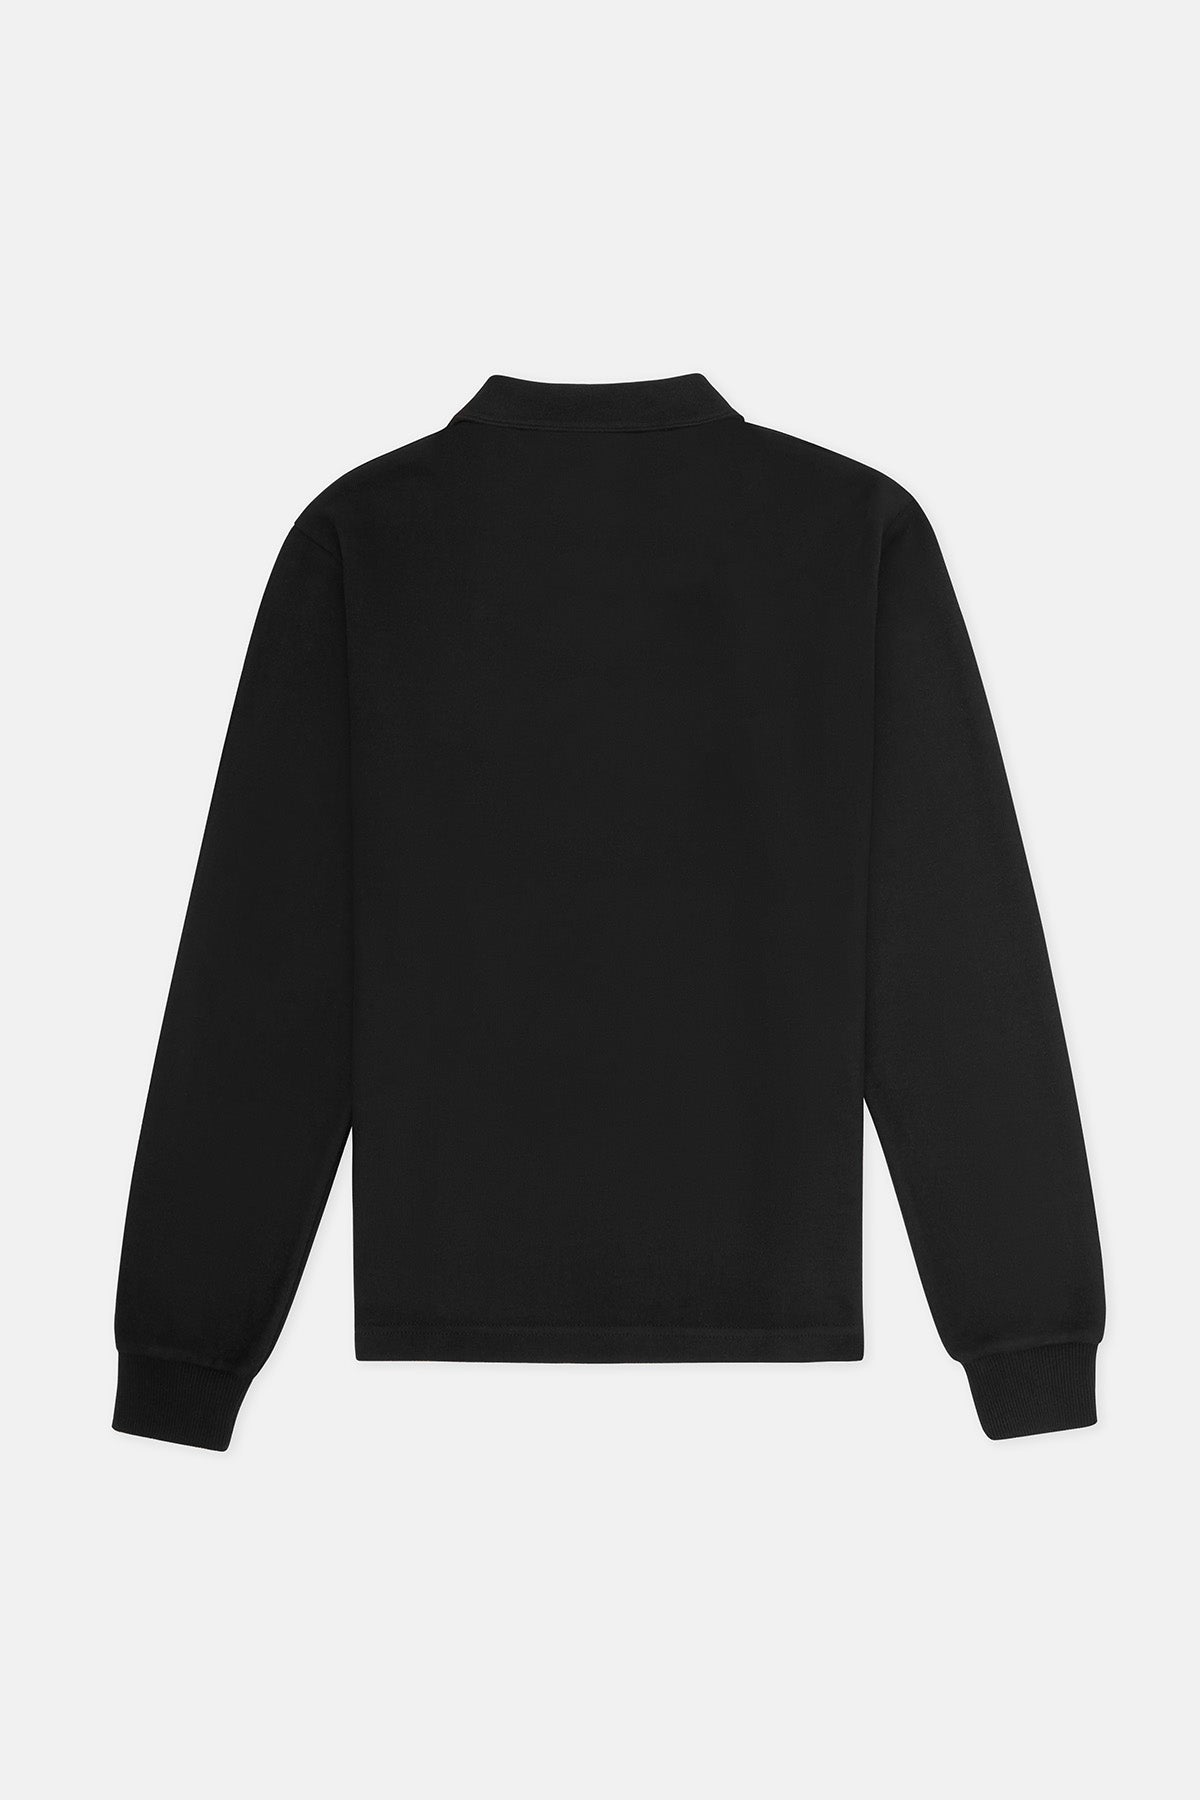 Kızıl Tilki Super Soft Polo Sweatshirt - Siyah